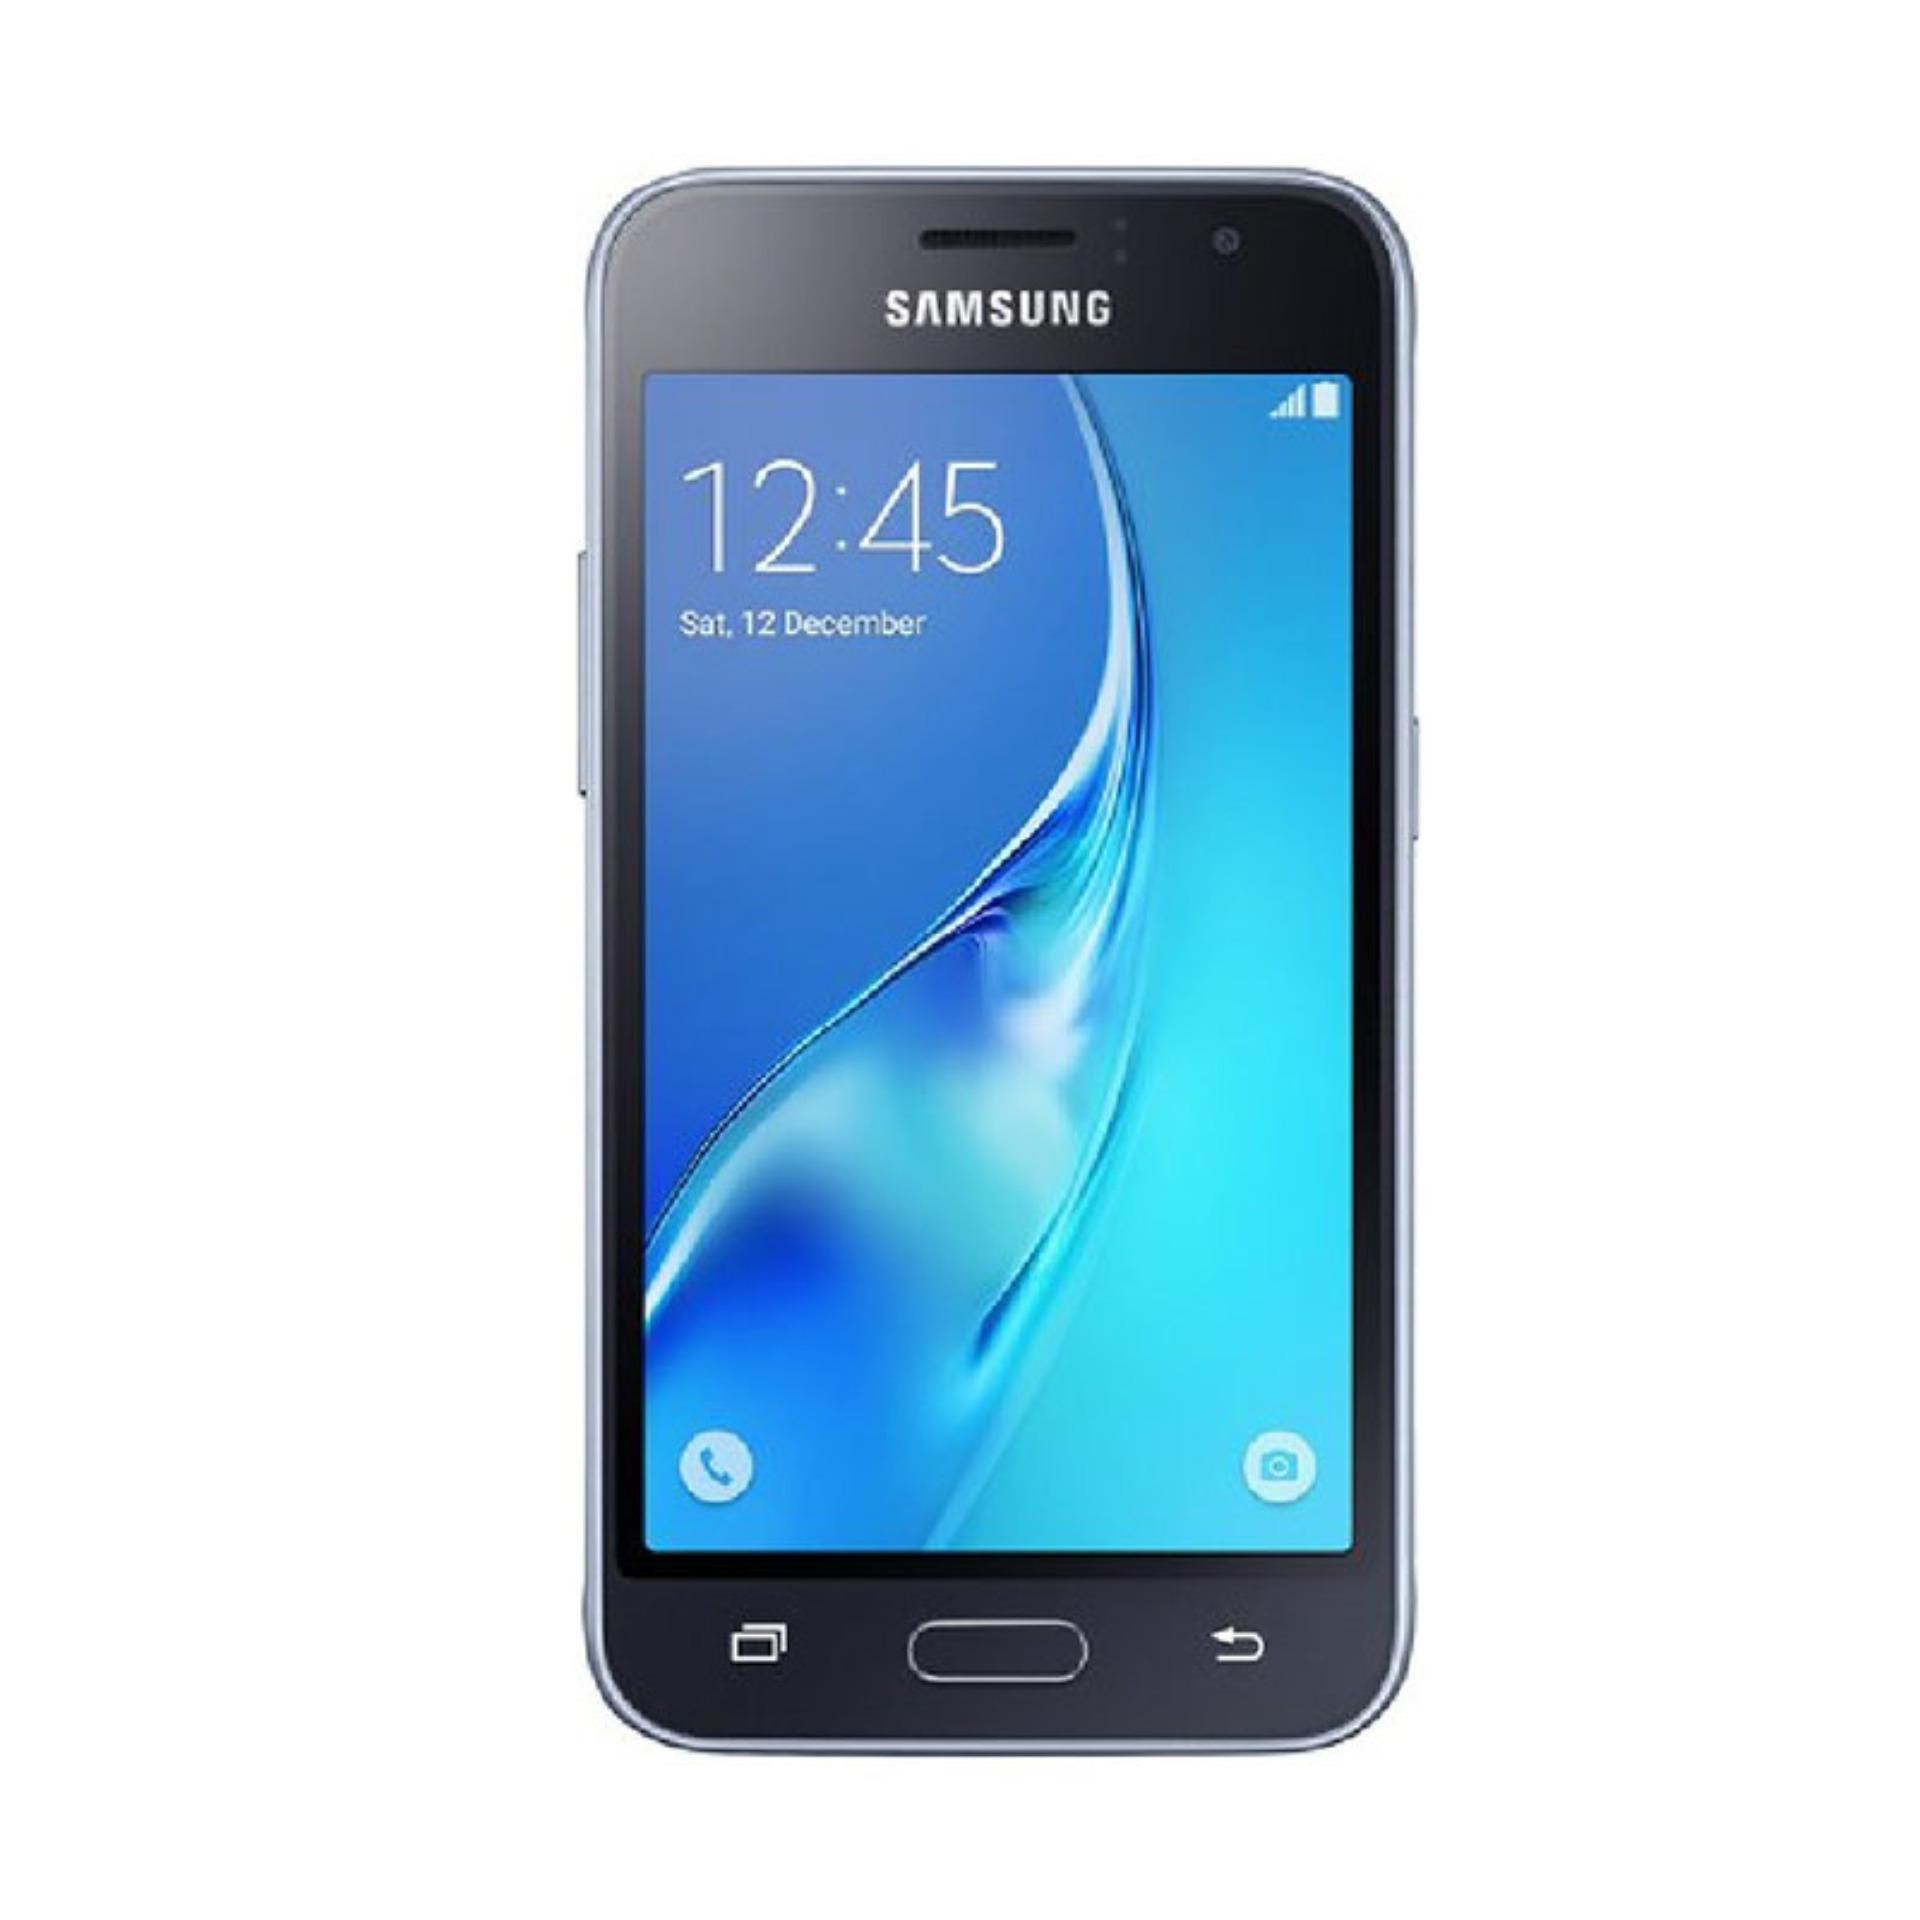 MURAH Samsung Galaxy J1 2016 Smartphone - Gudang Hp Samsung